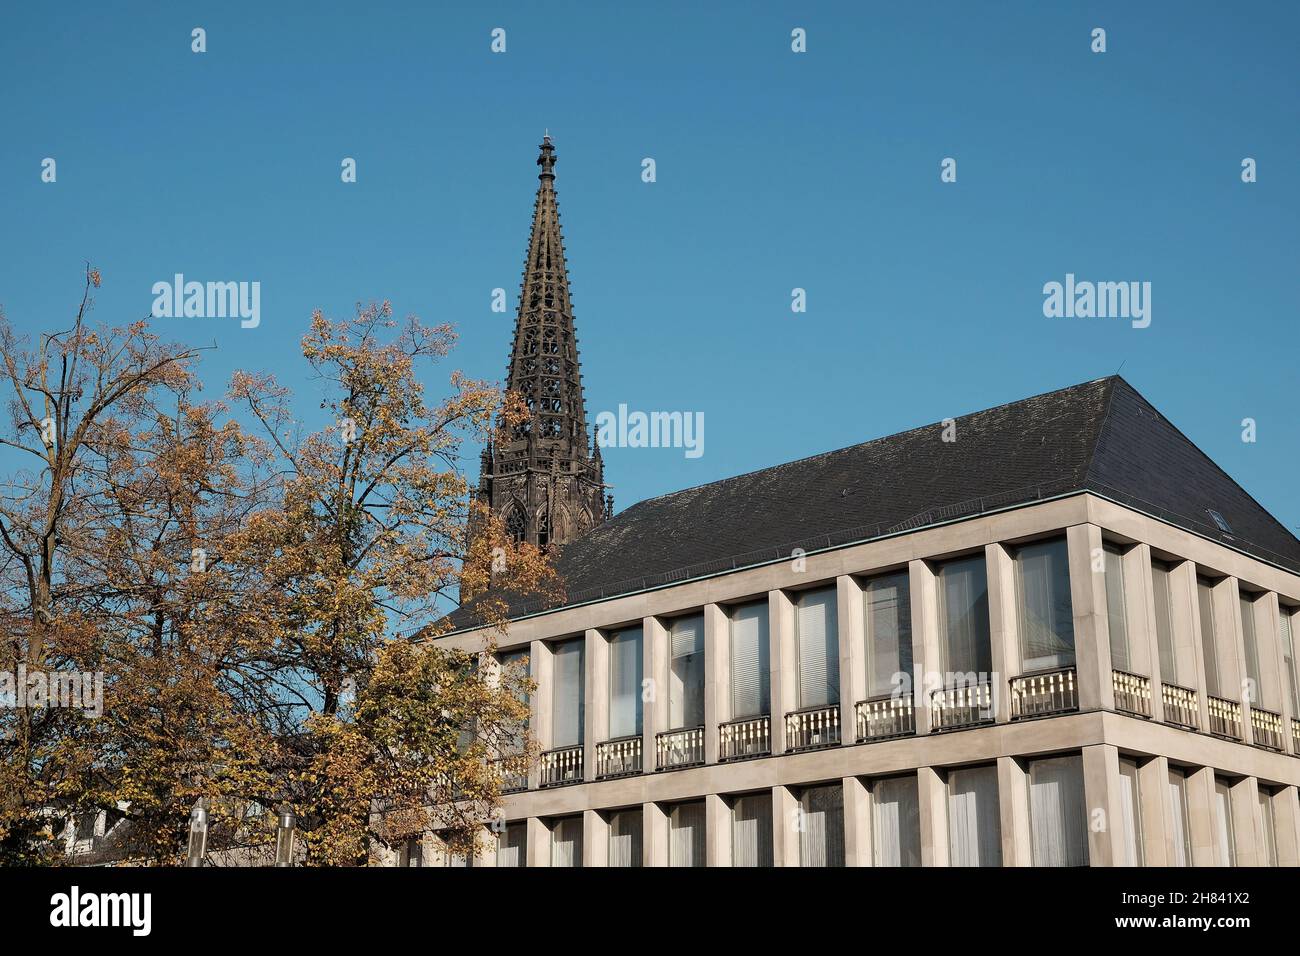 Scenic view of St Lambert's Church in Munster, Germany Stock Photo